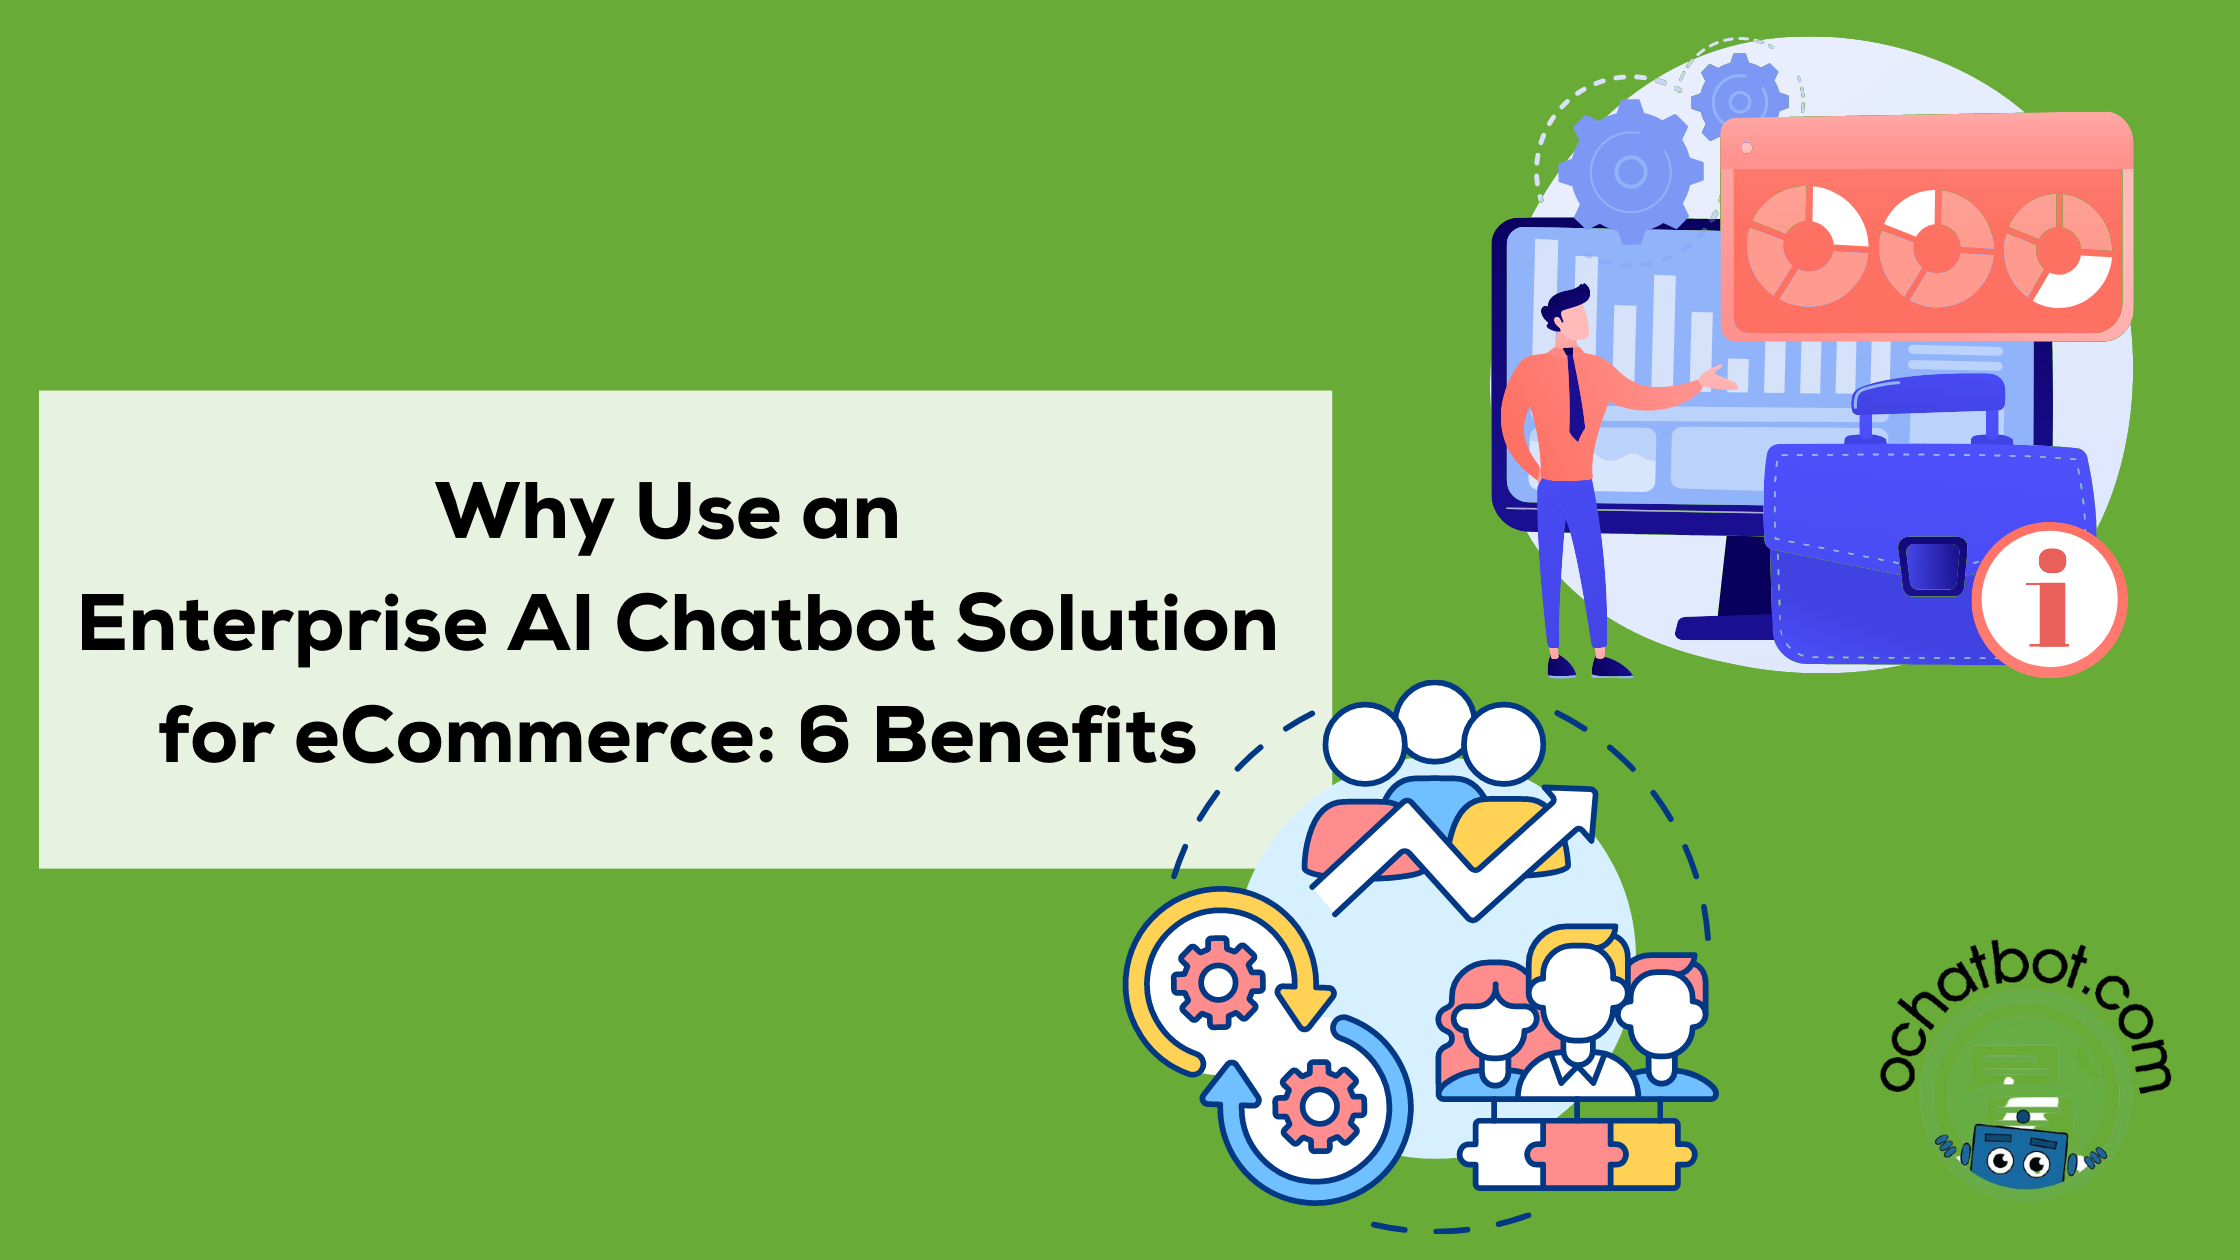 Enterprise AI Chatbot Solution for eCommerce